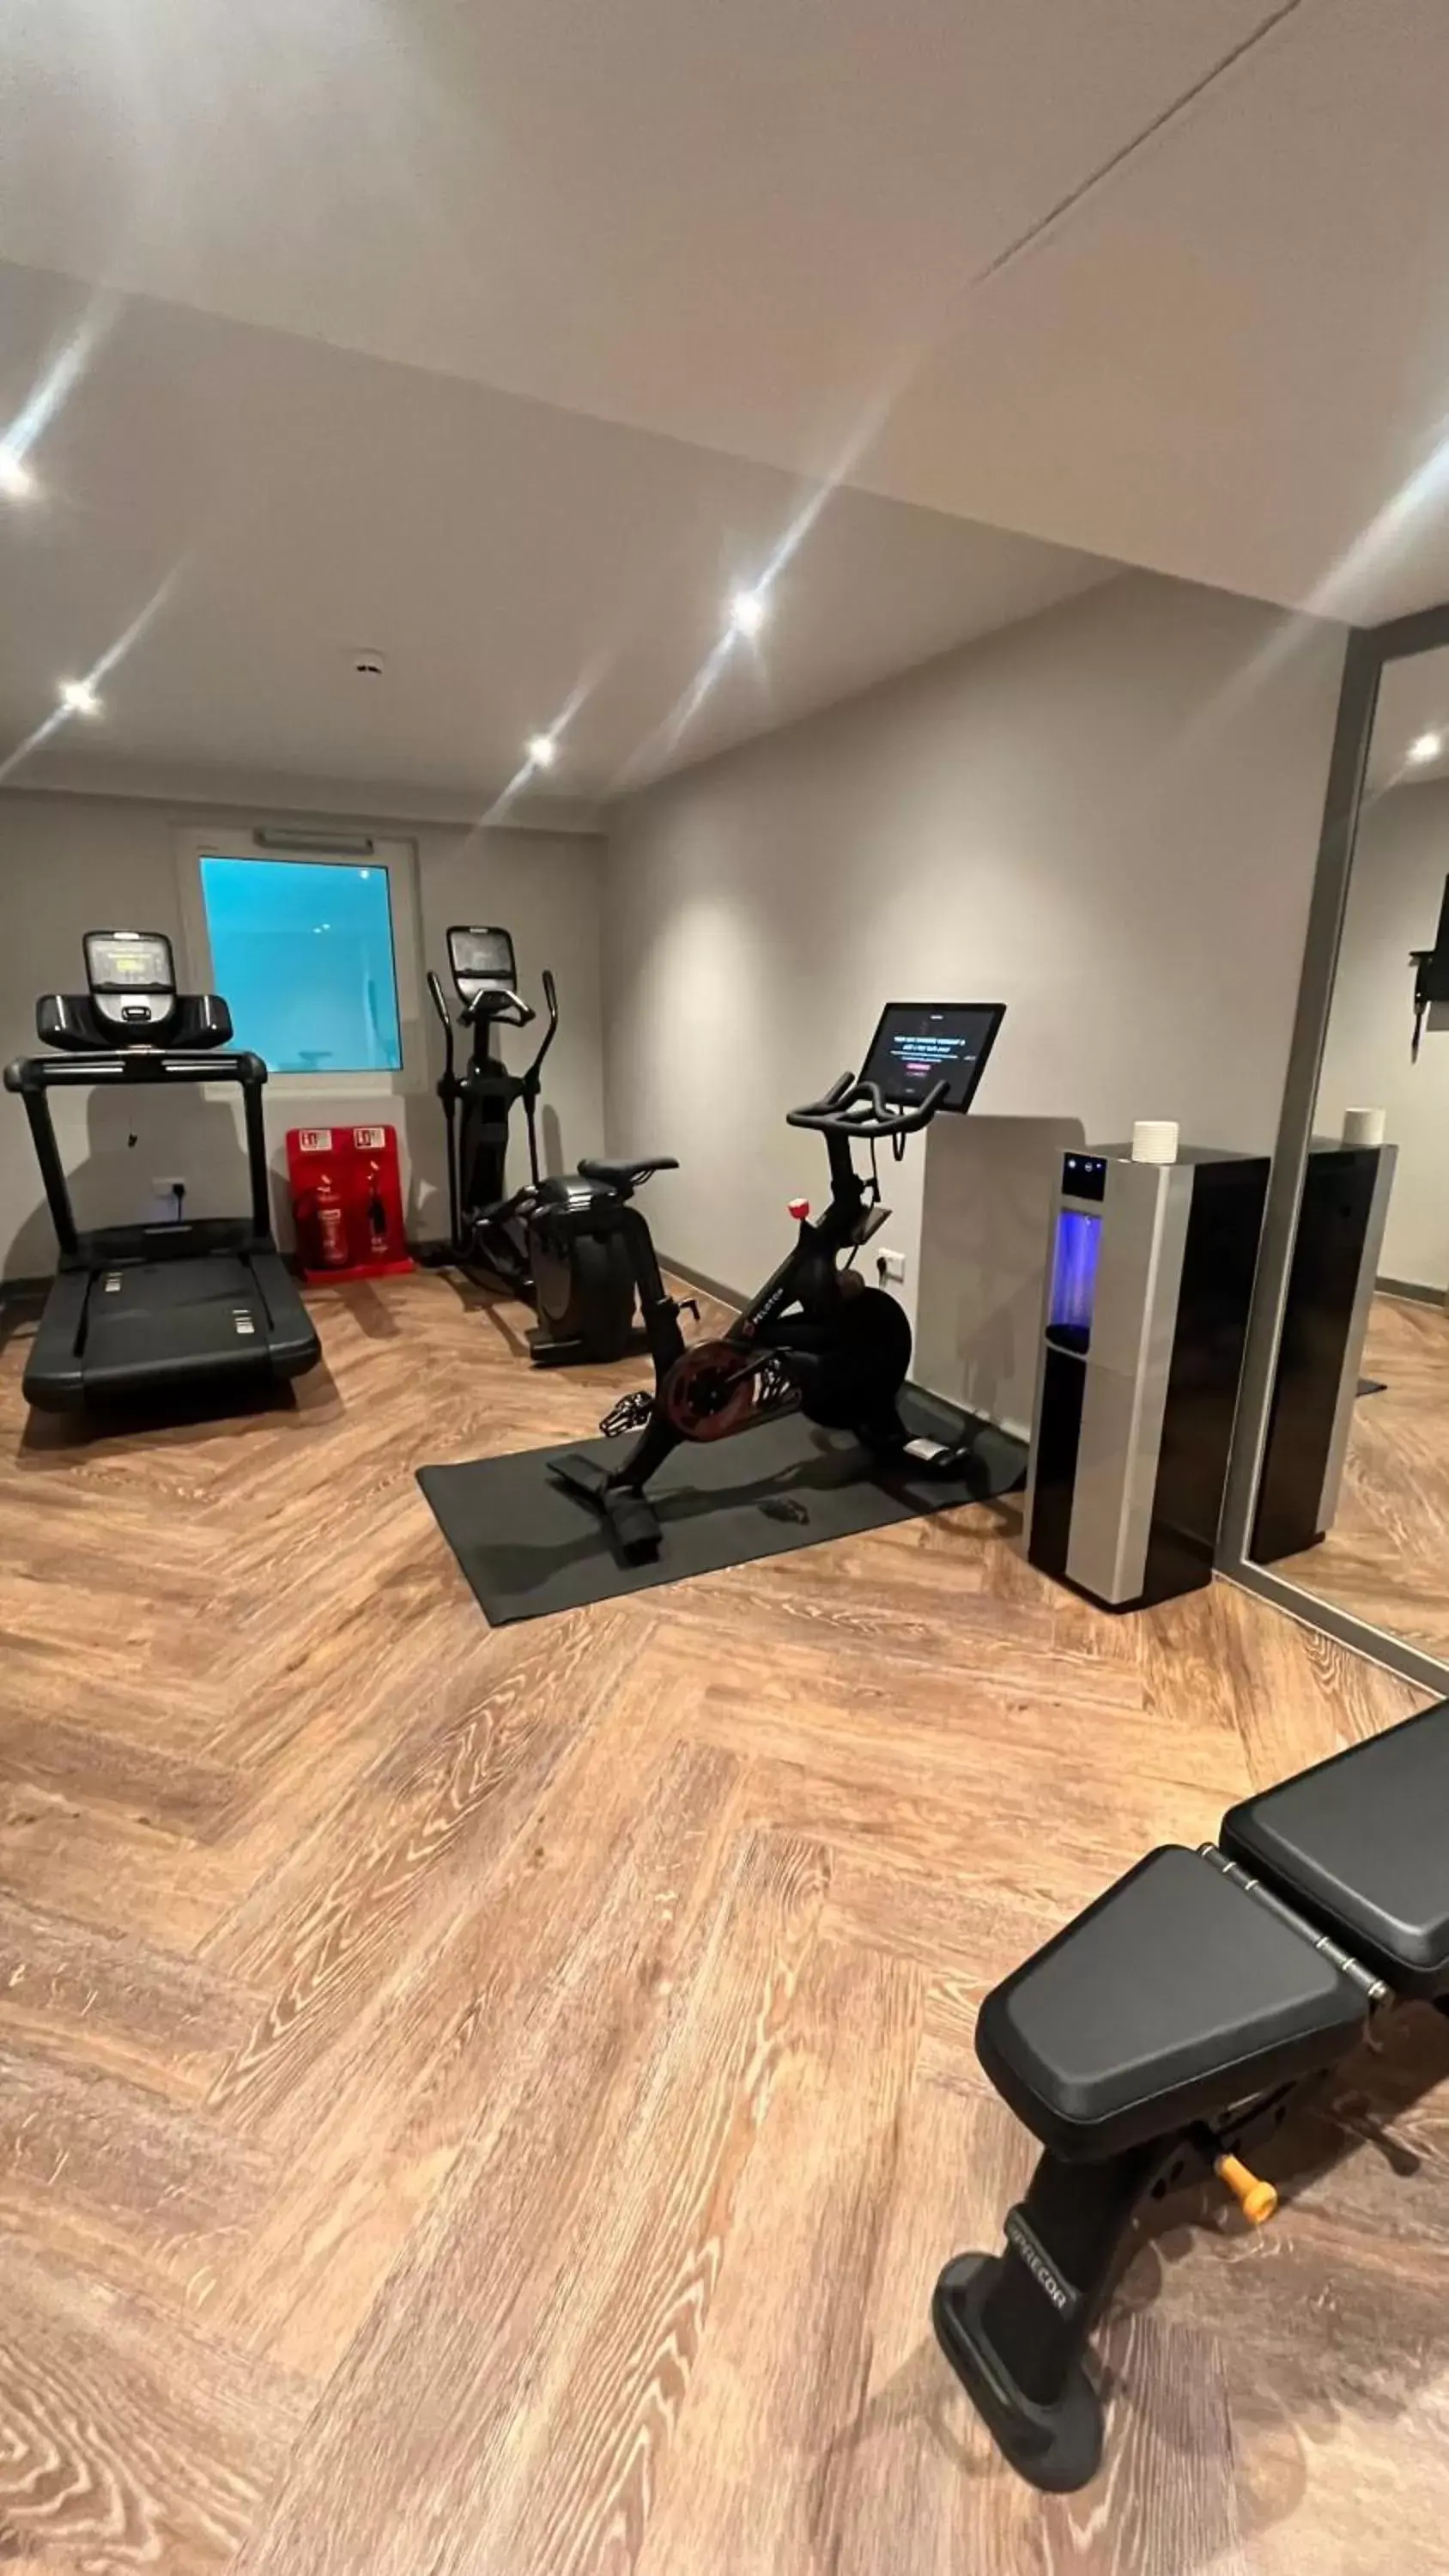 Fitness centre/facilities, Fitness Center/Facilities in Maldron Hotel Finsbury Park, London